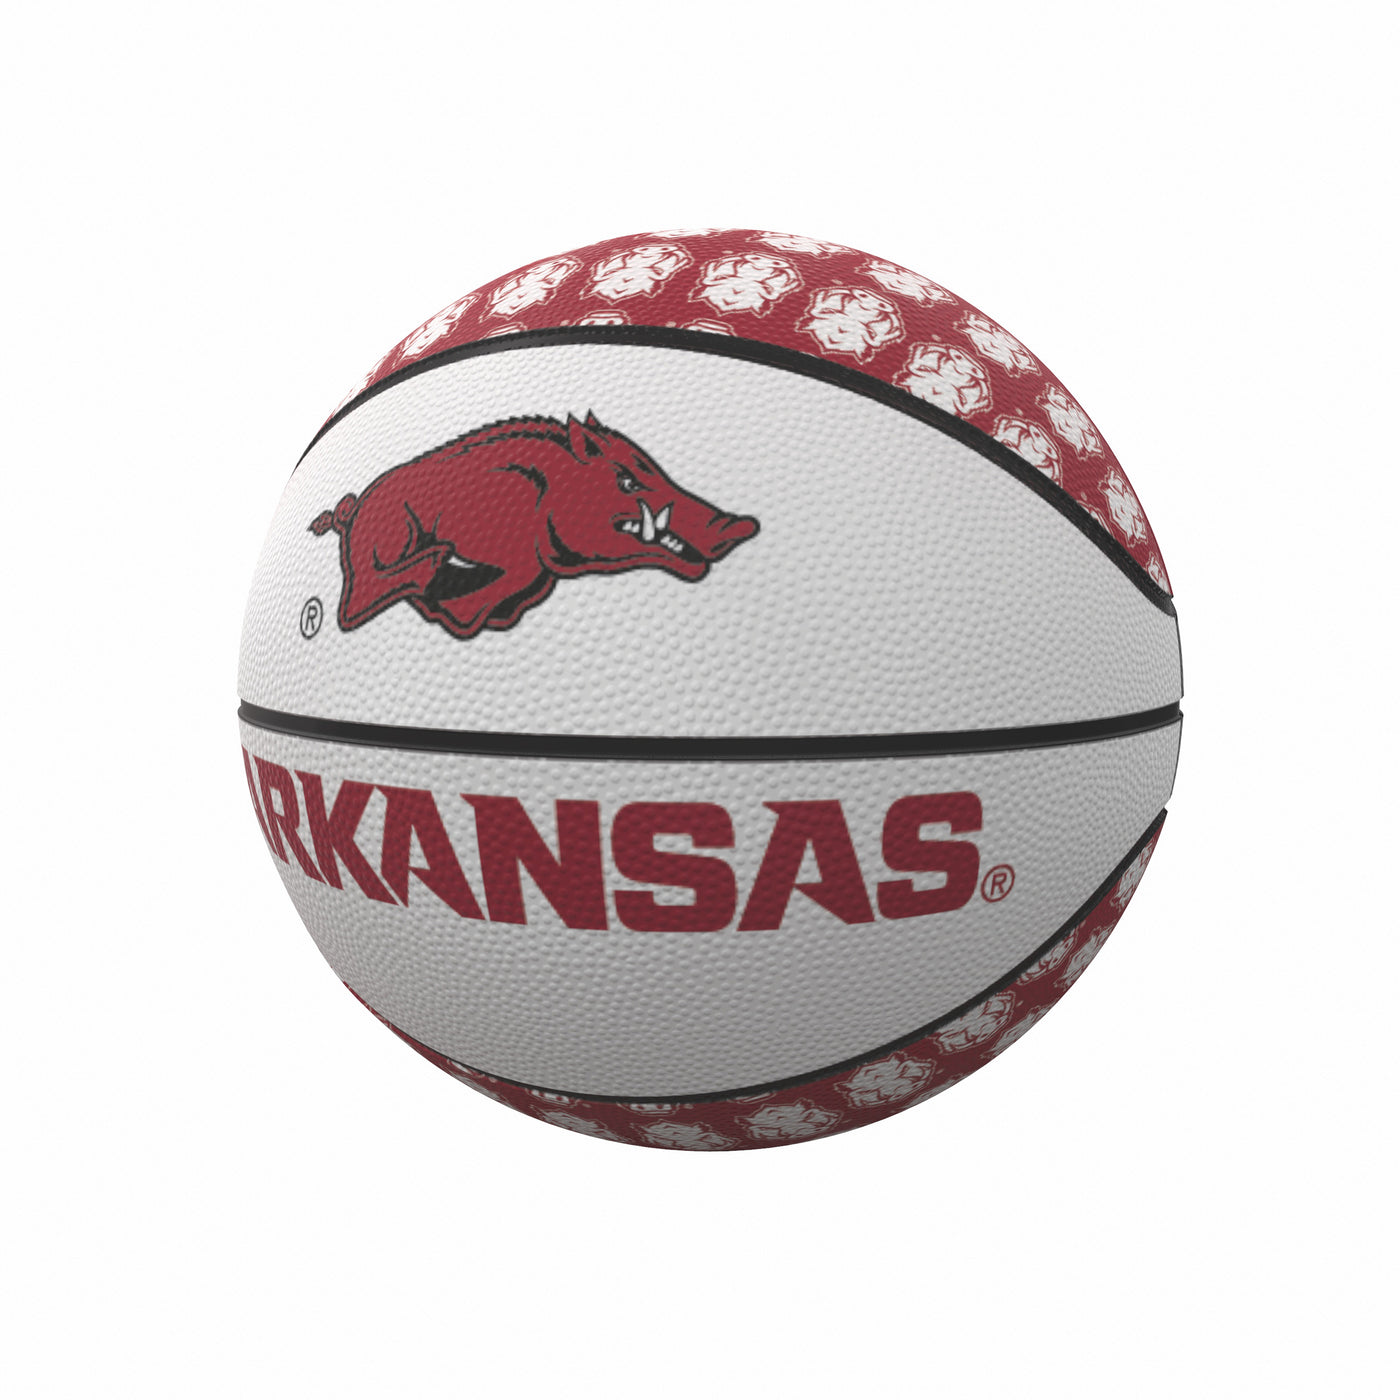 Arkansas Repeating Logo Mini-Size Rubber Basketball